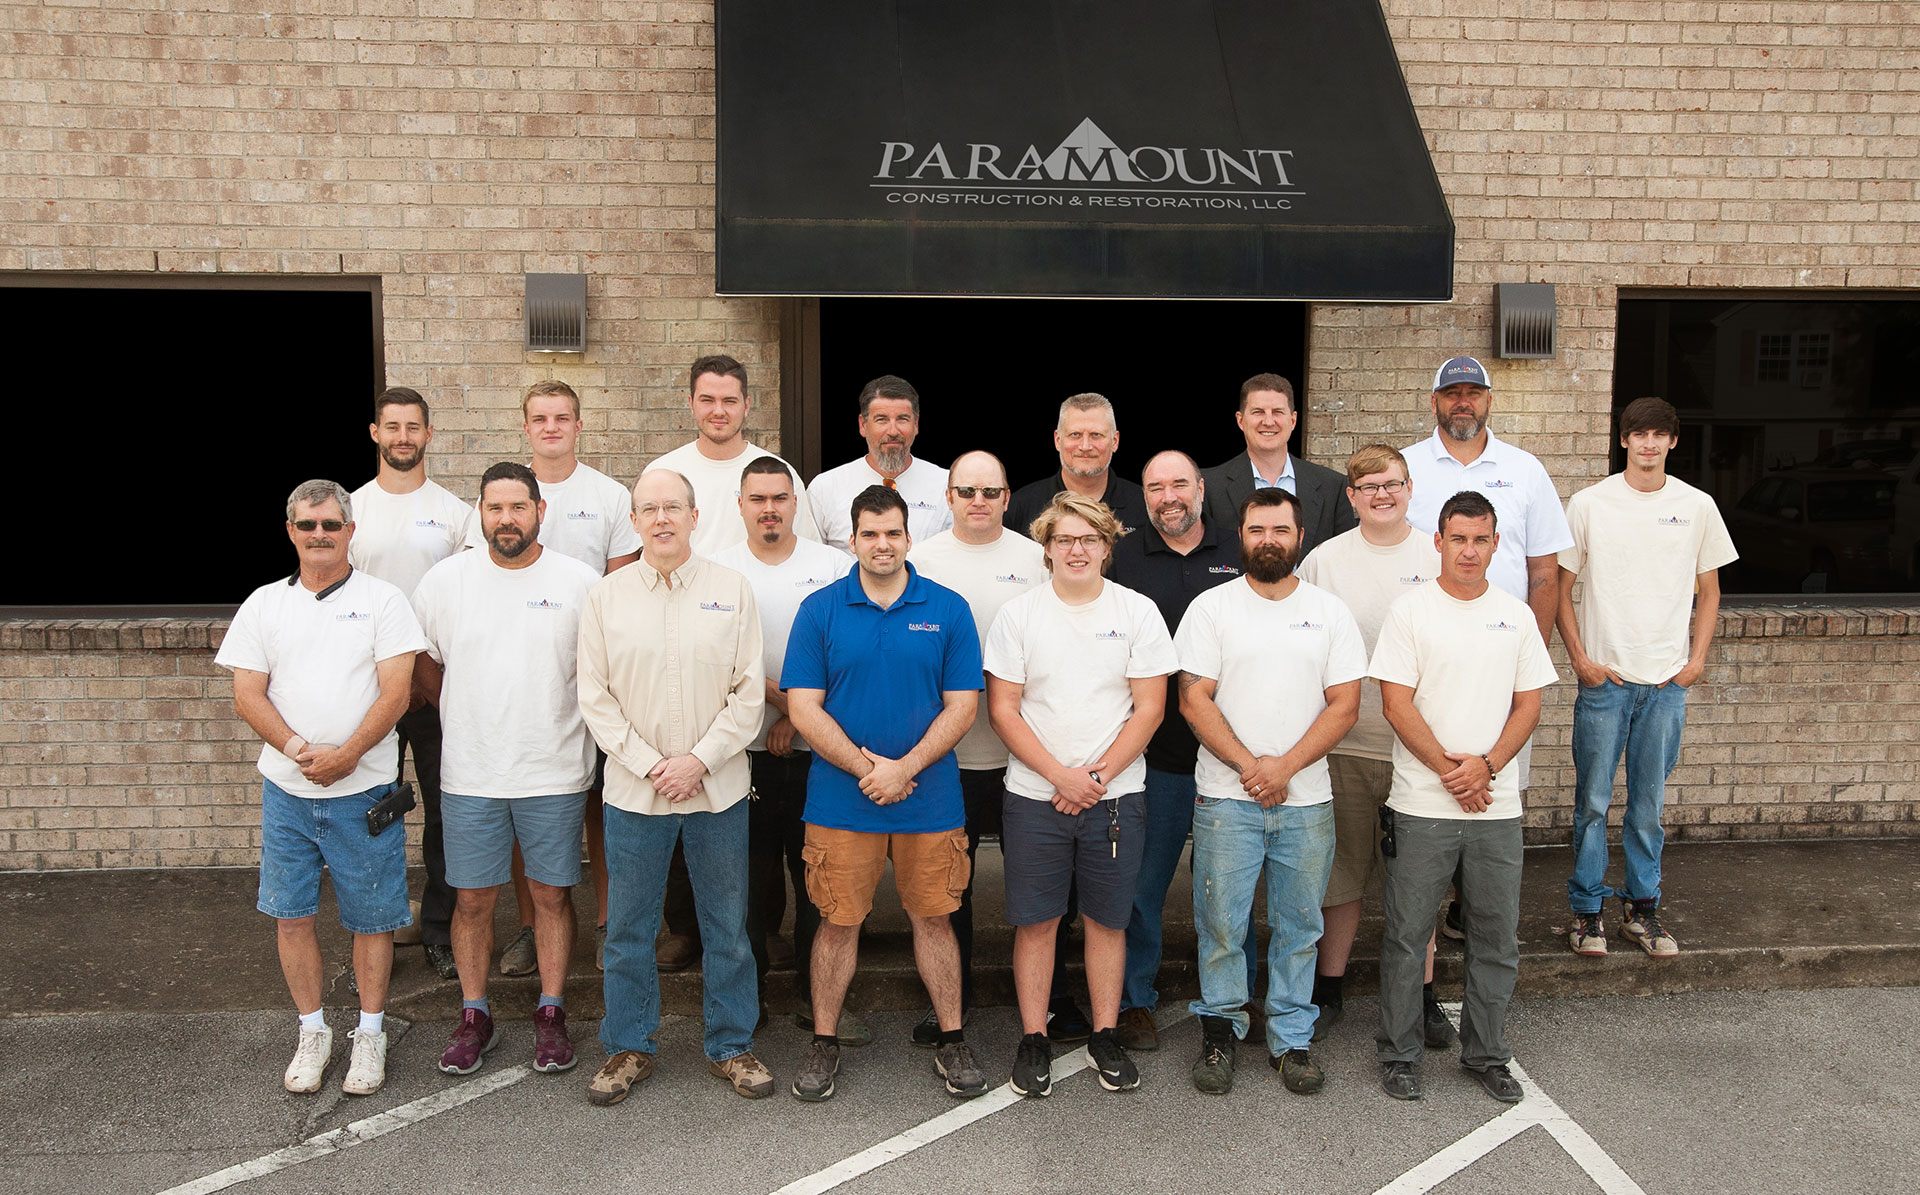 Paramount Construction & Restoration, LLC